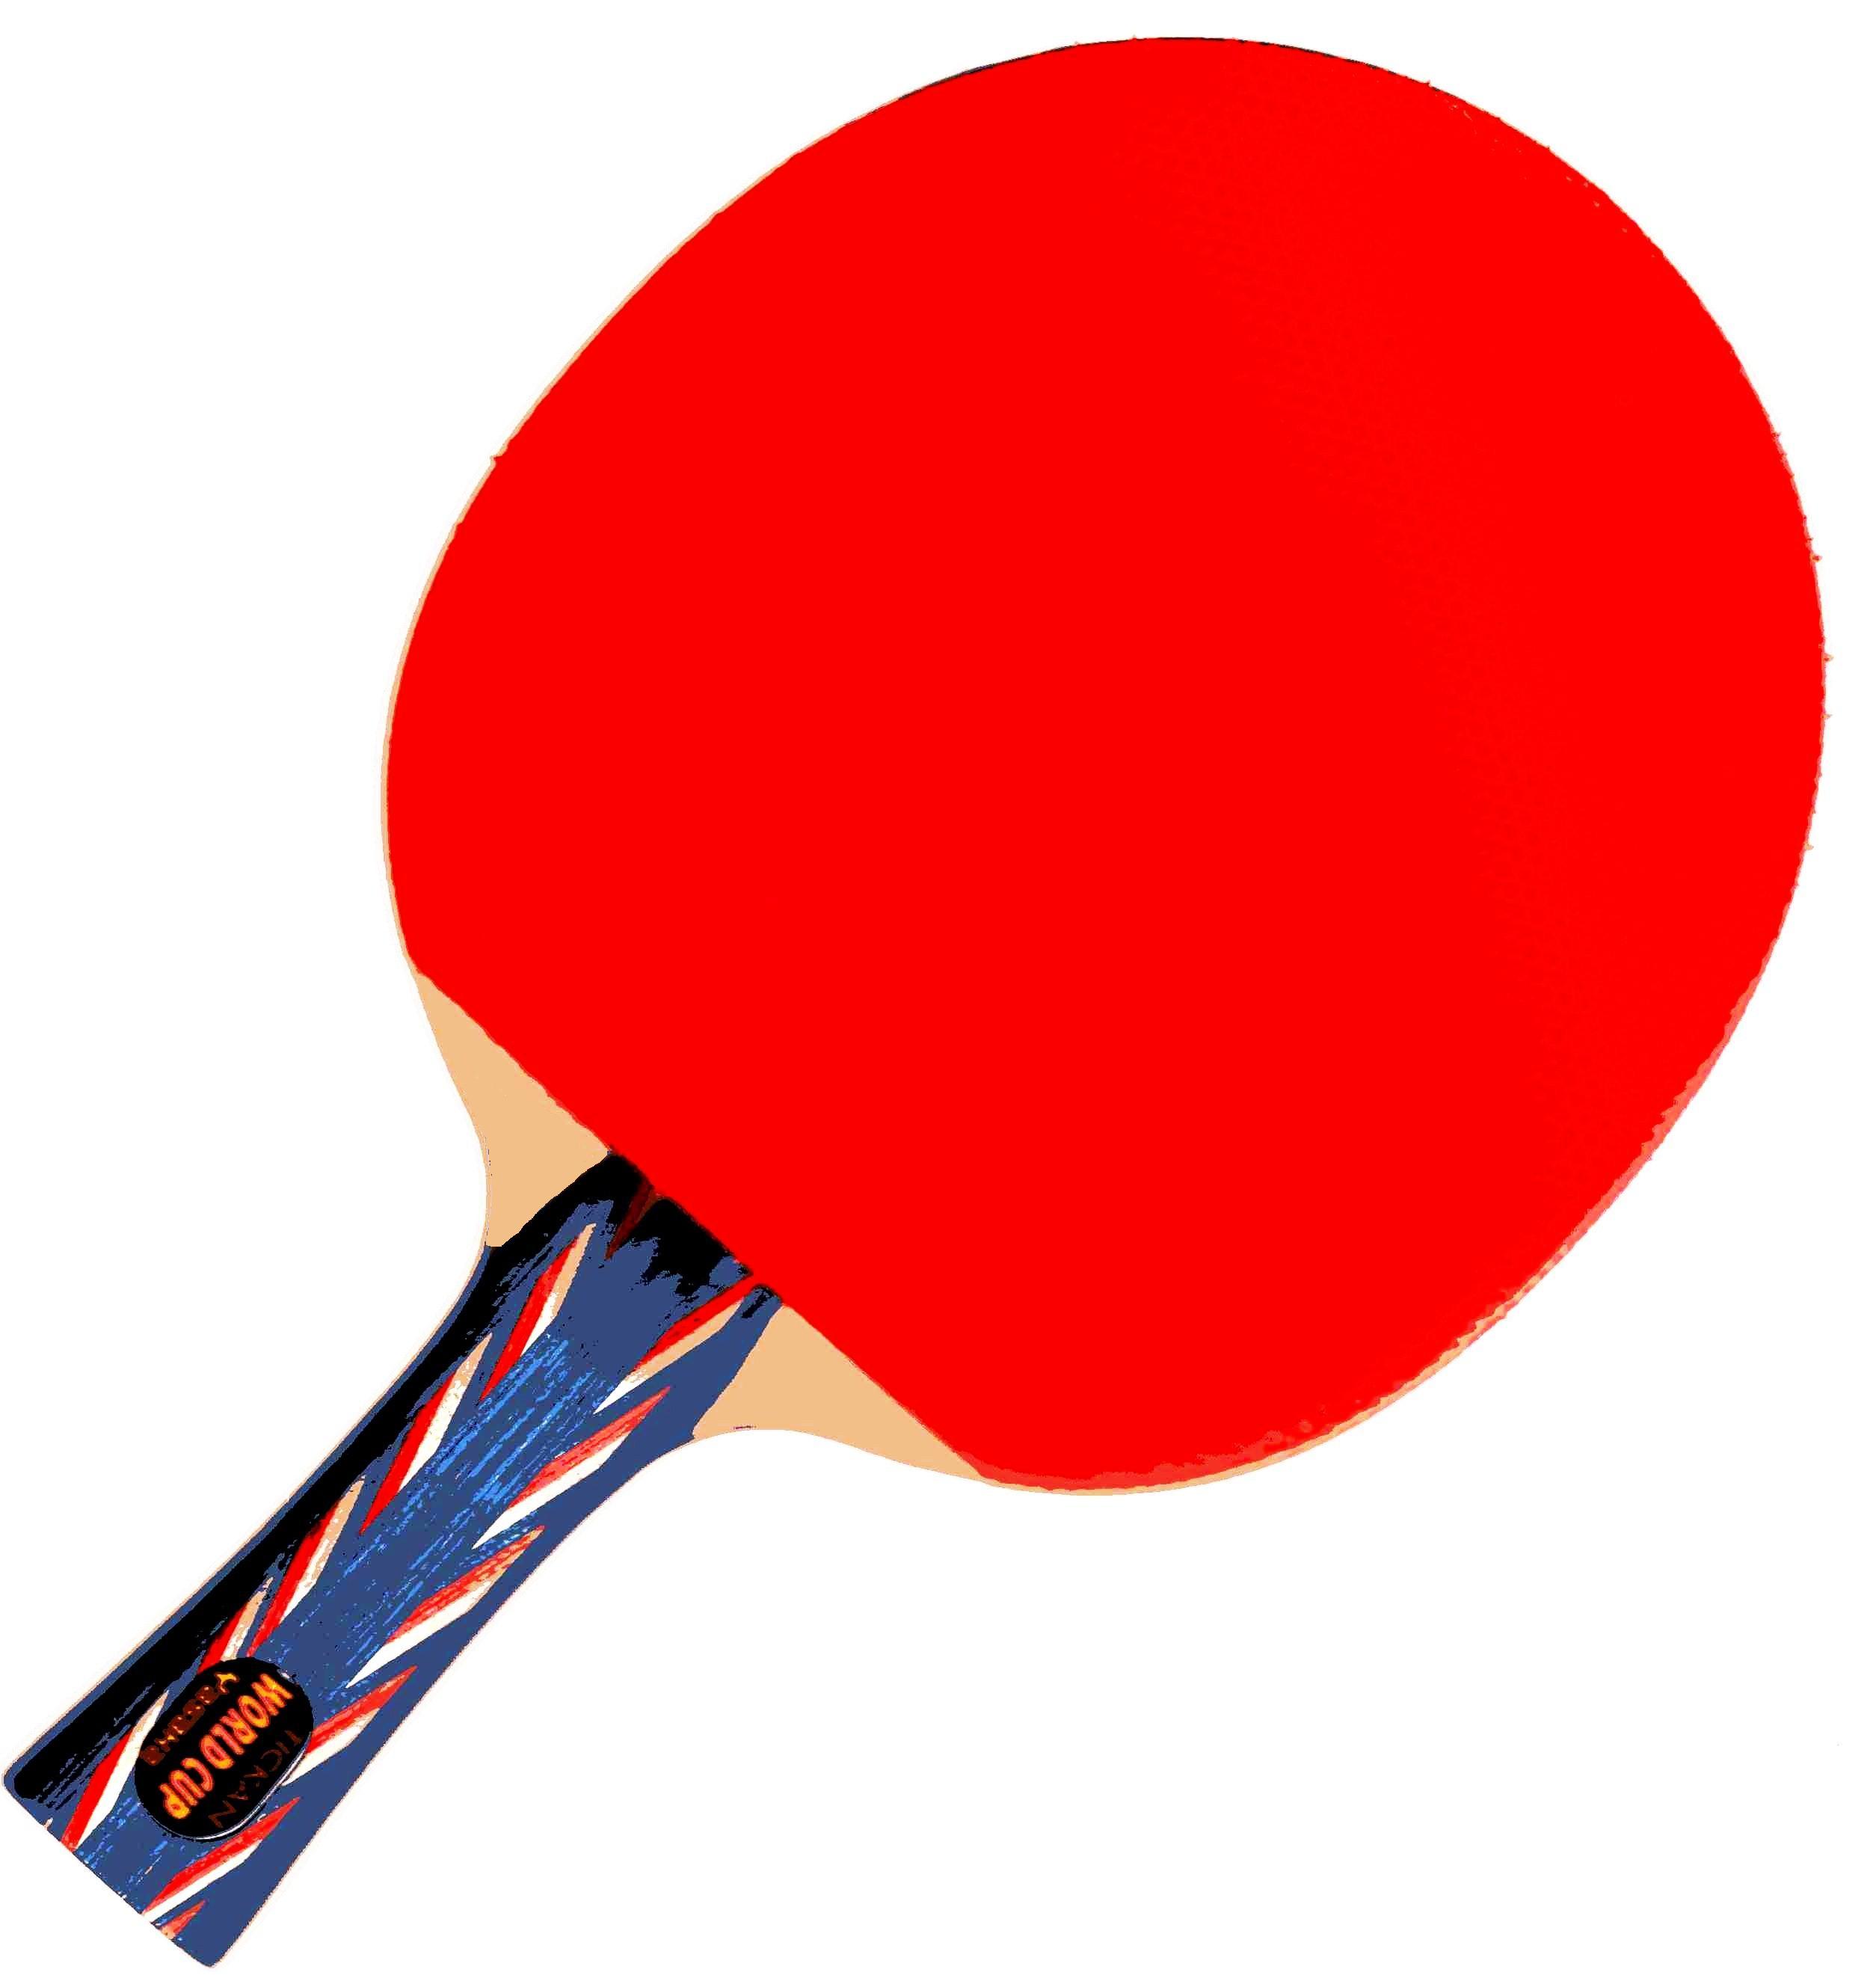 Table-tennis bat clipart - Clipground